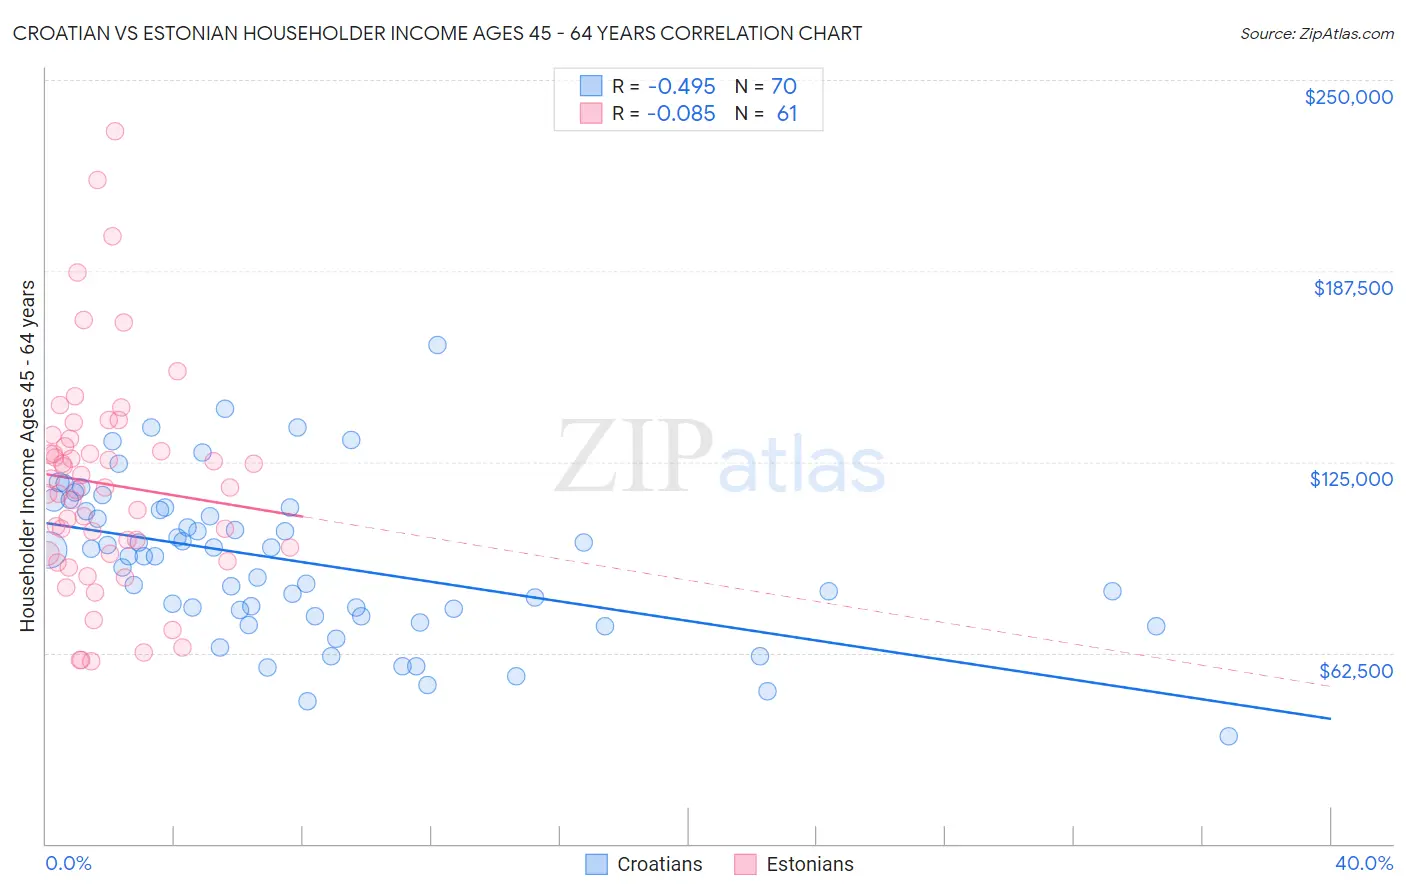 Croatian vs Estonian Householder Income Ages 45 - 64 years